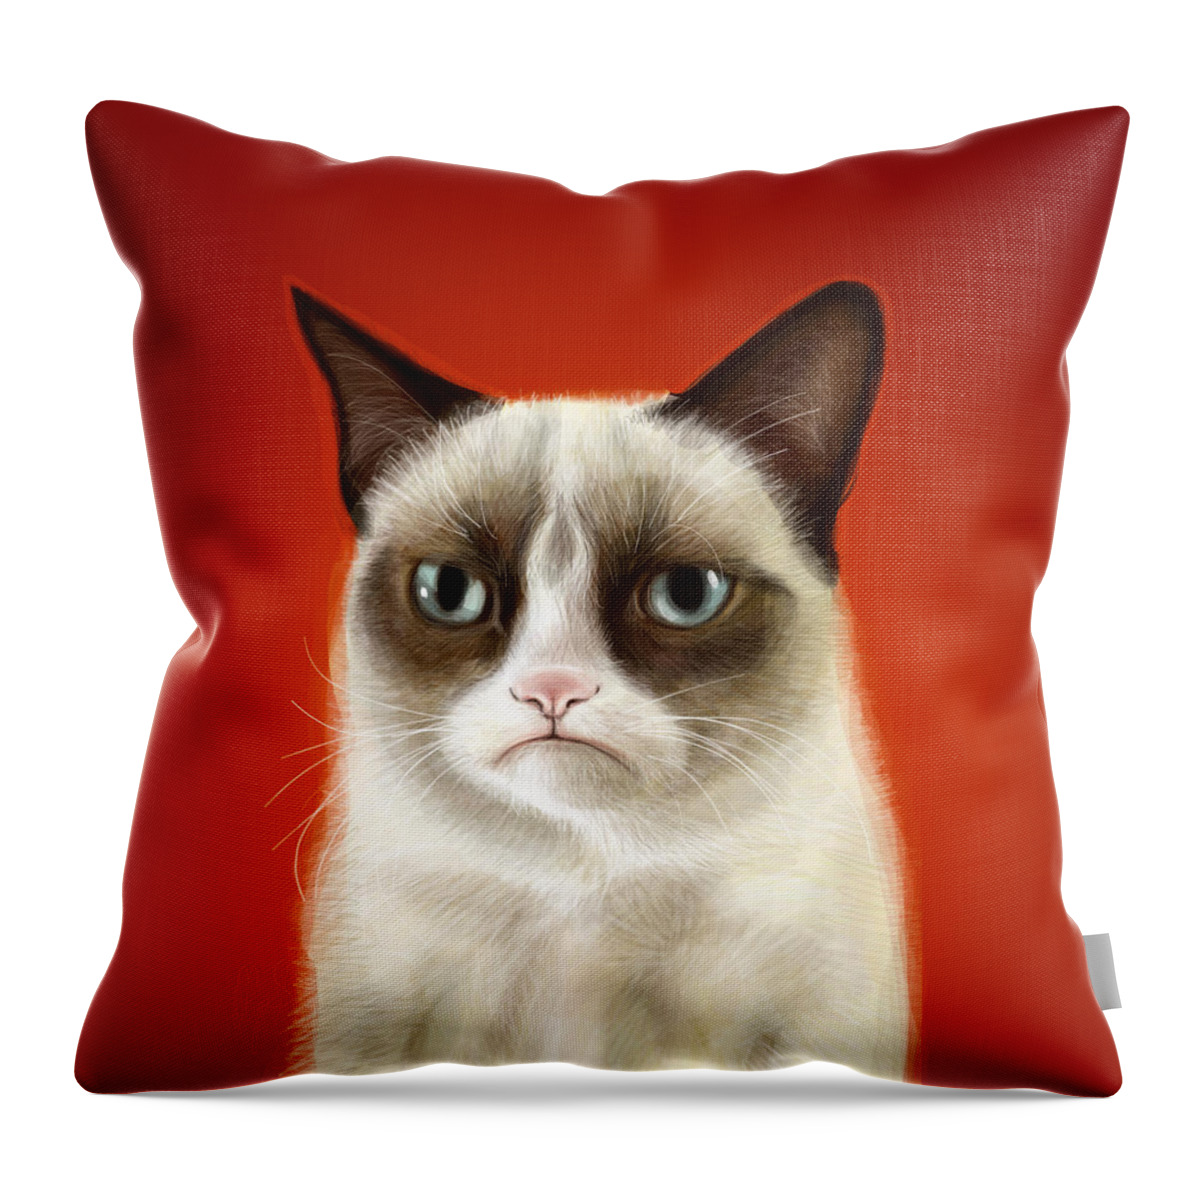 Grumpy Throw Pillow featuring the digital art Grumpy Cat by Olga Shvartsur